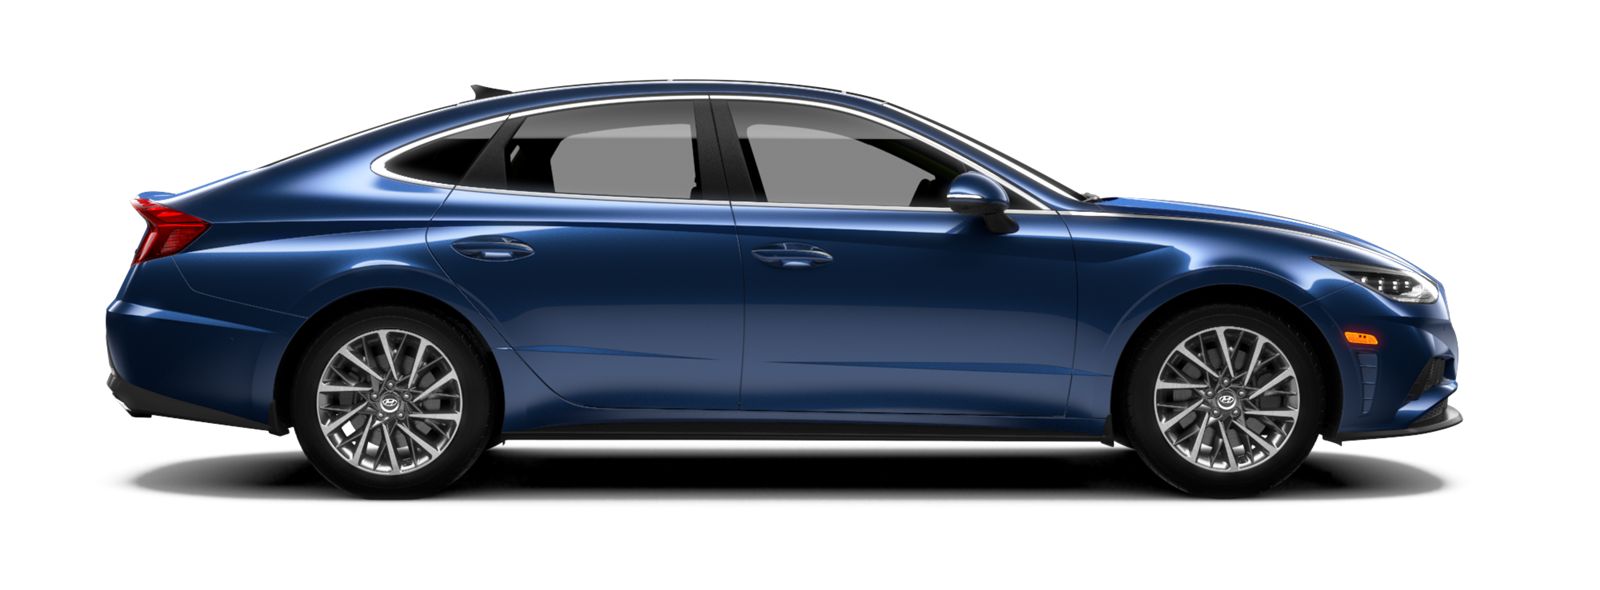 Hyundai USA | The All-New 2020 Sonata